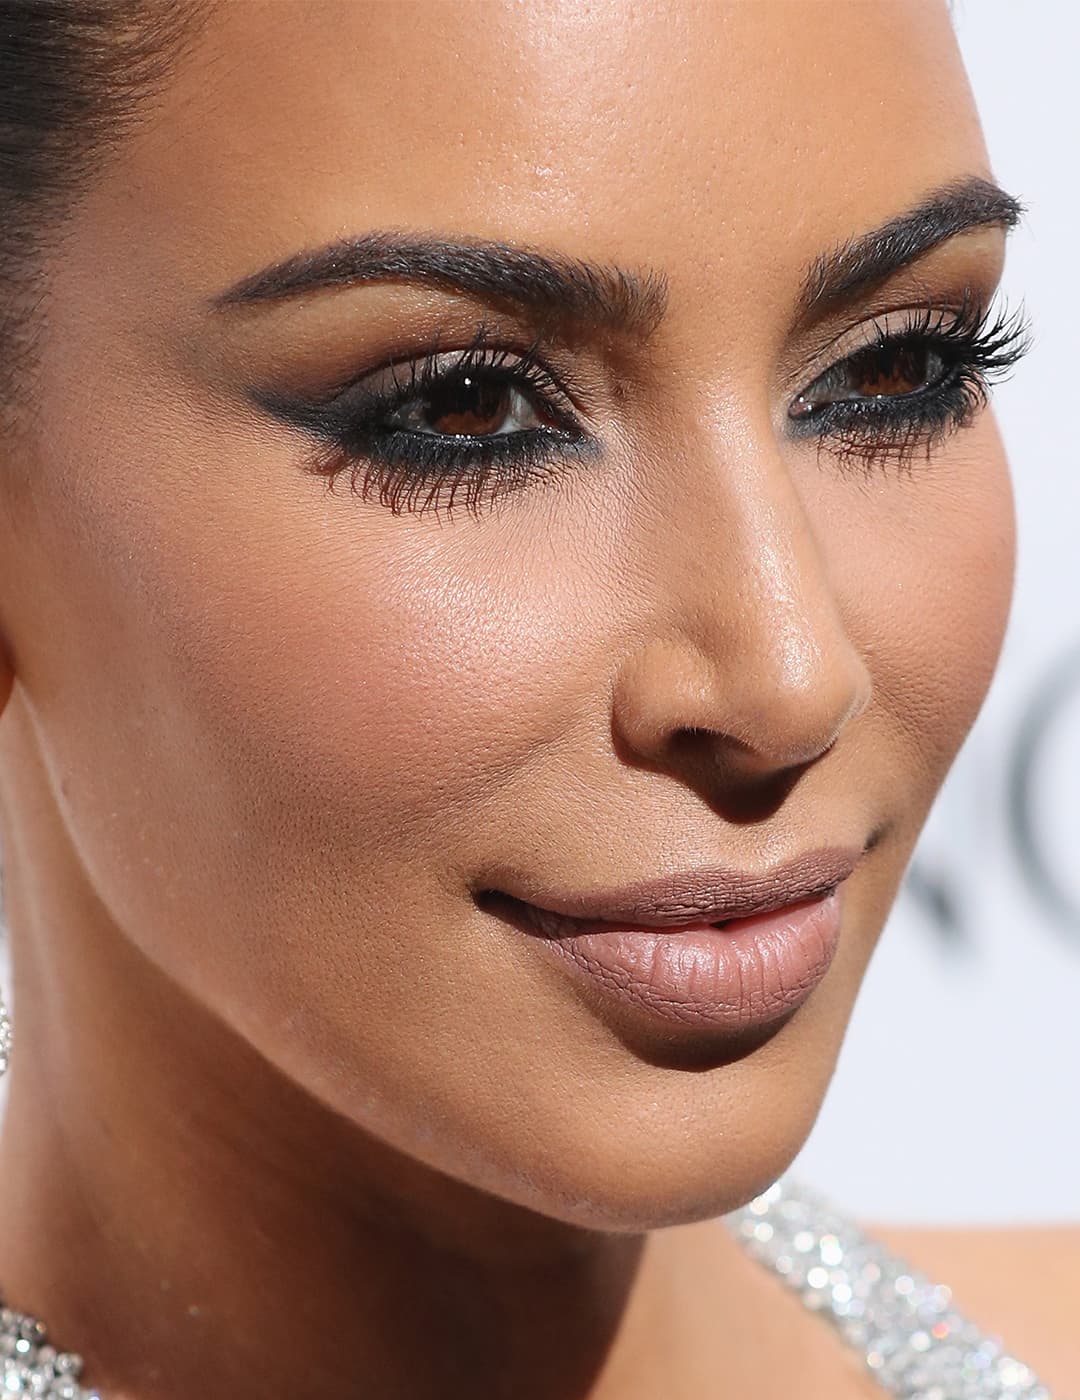 A photo of Kim Kardashian wearing a diamond earring, nude lipstick and a black eyeliner